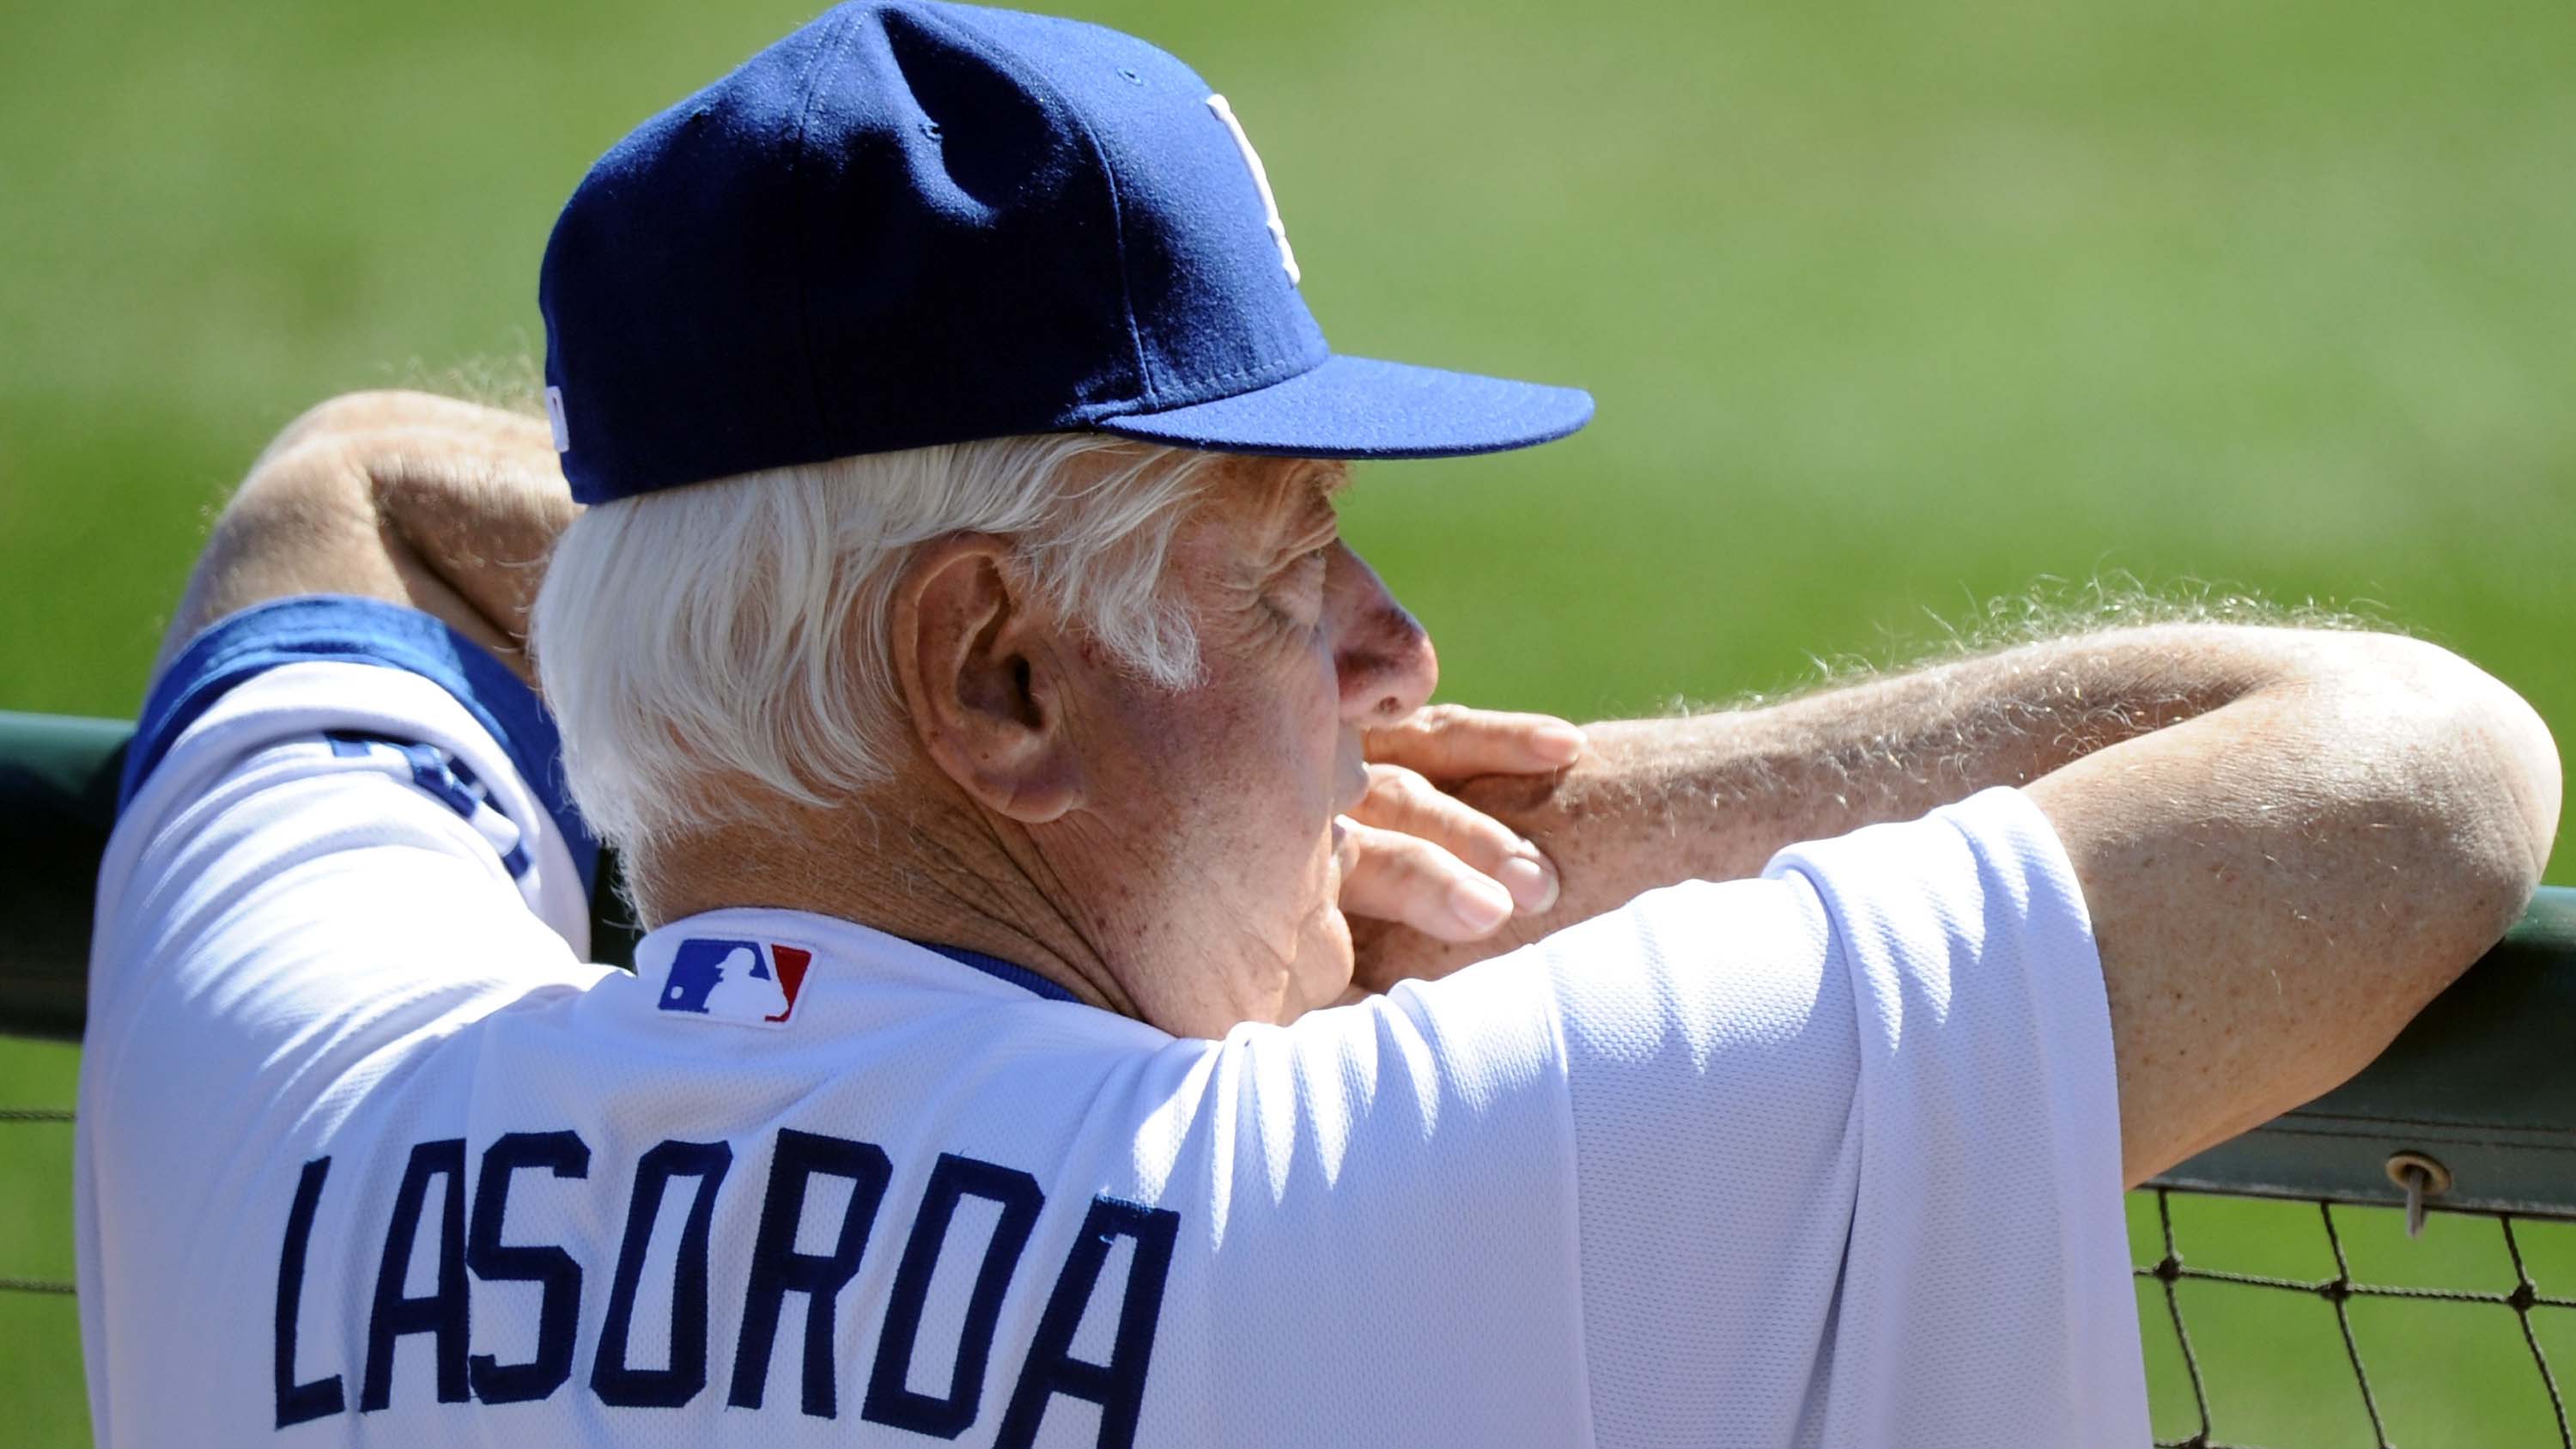 Astros Pitcher Ties Dodgers Legend Sandy Koufax's World Series